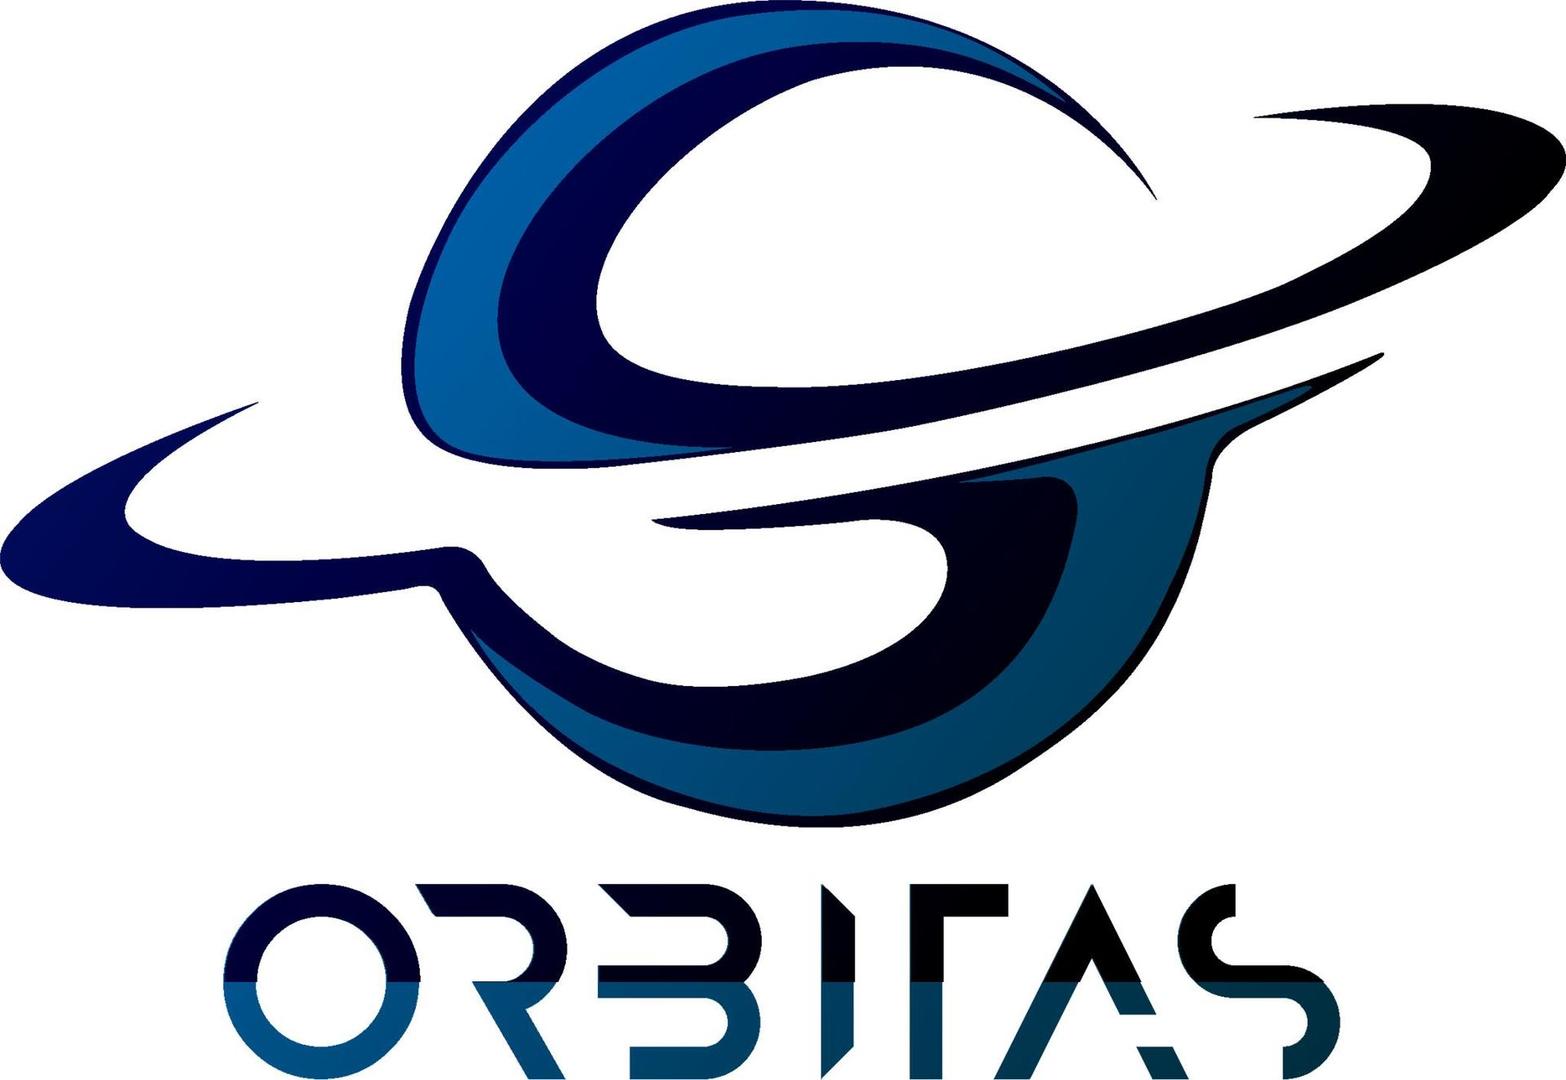 Orbitas Logo farbe.jpg